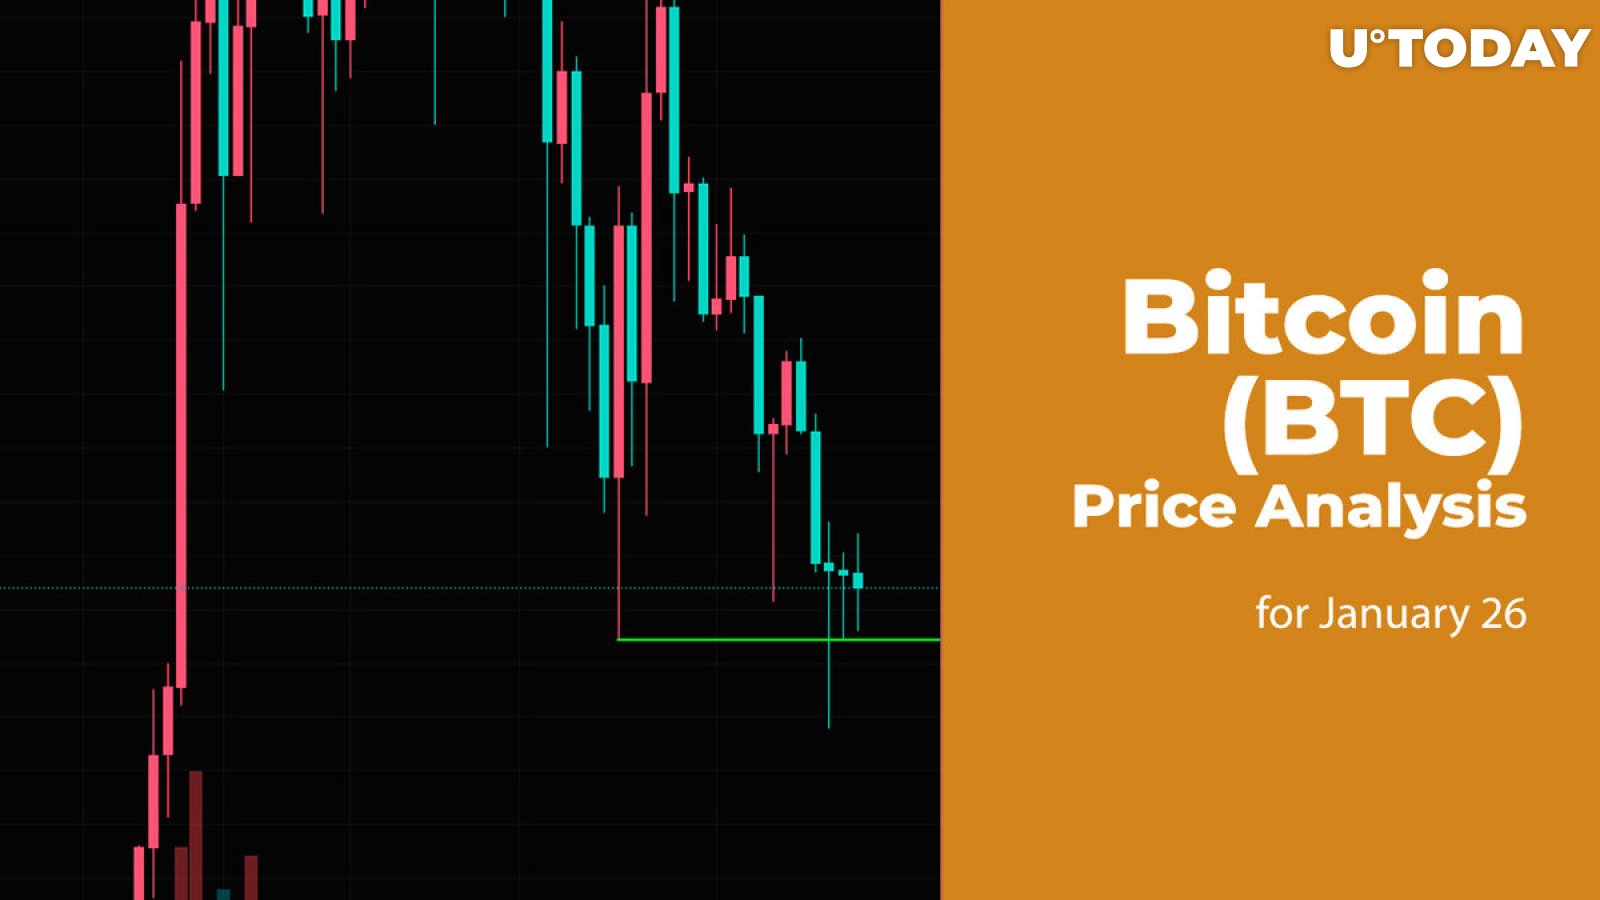 Bitcoin (BTC) Price Analysis for January 26